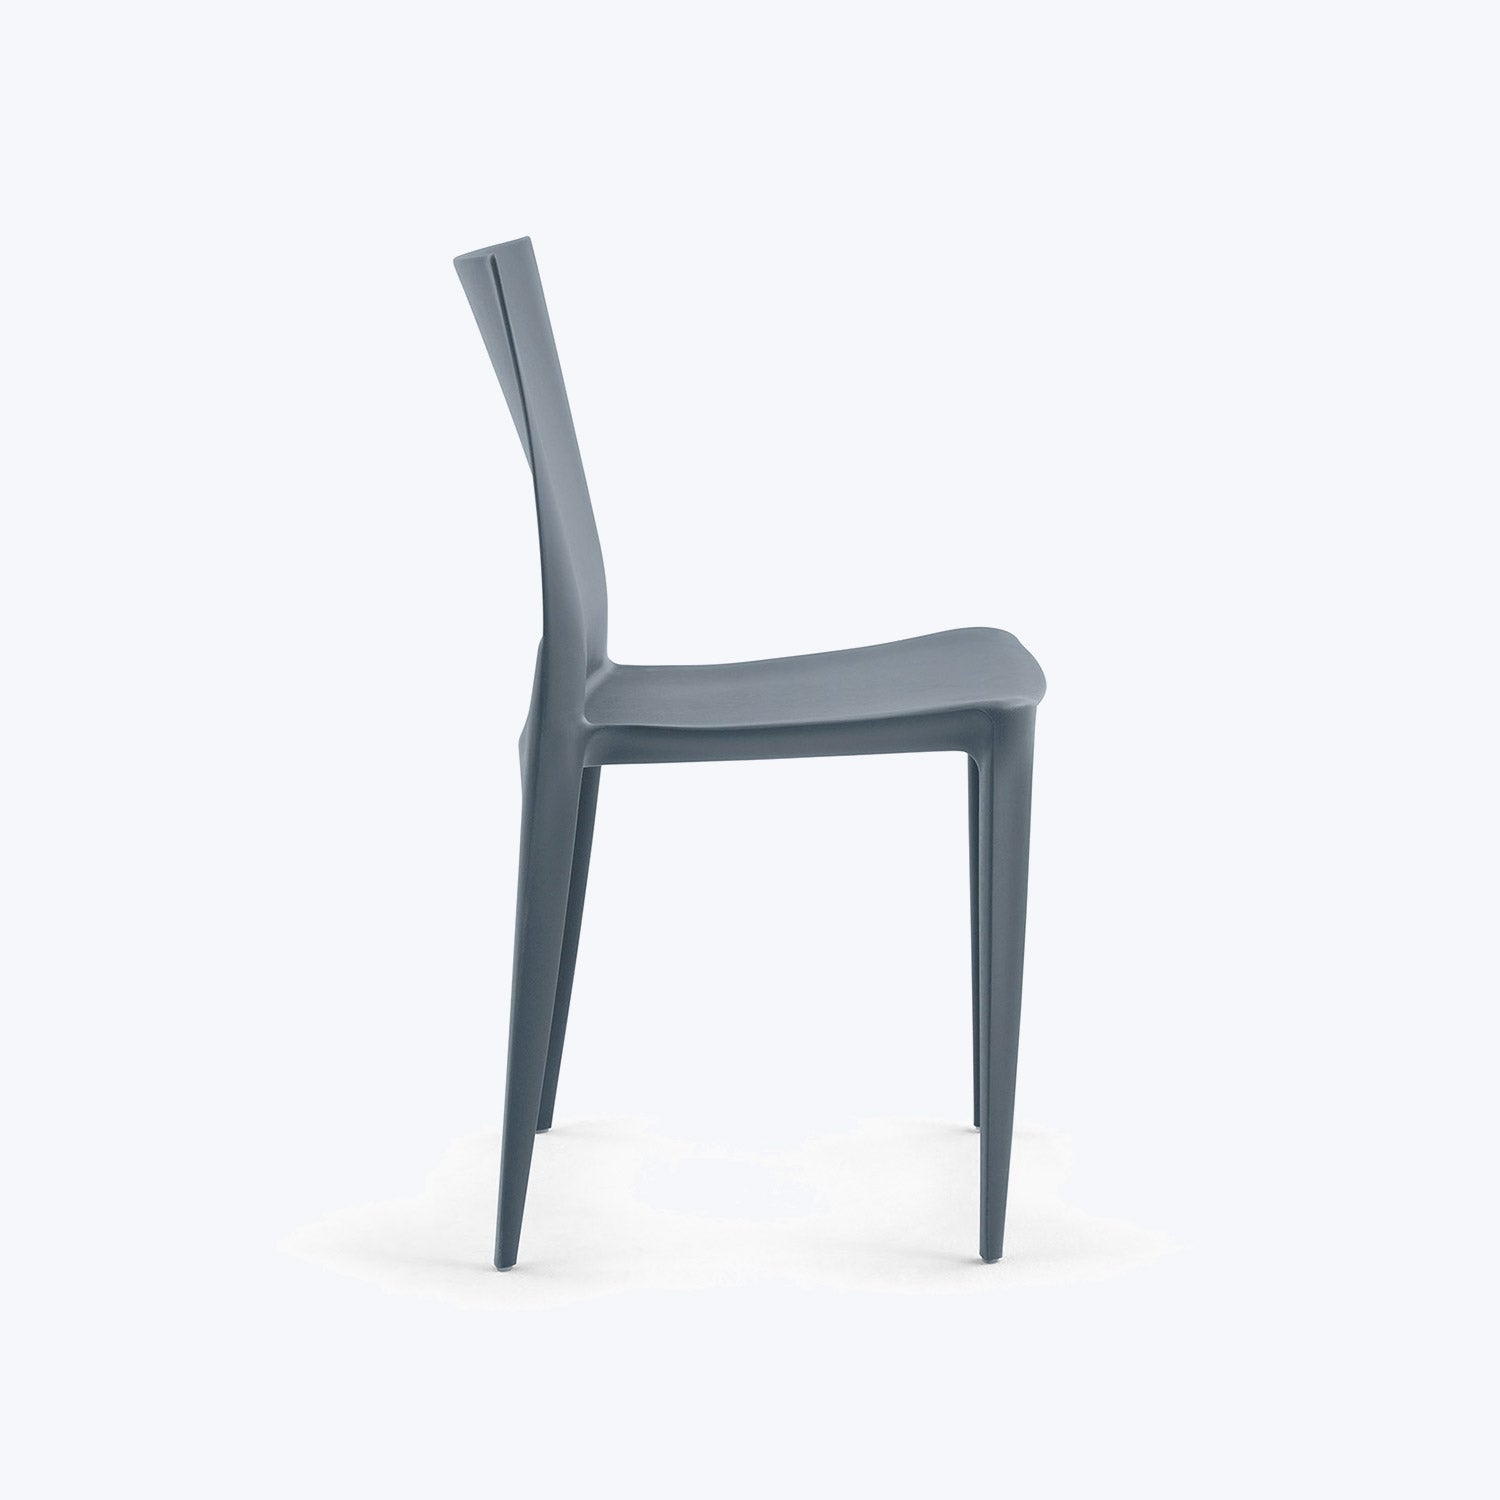 Bellini Dining Chair, Set of 4 Dark Grey